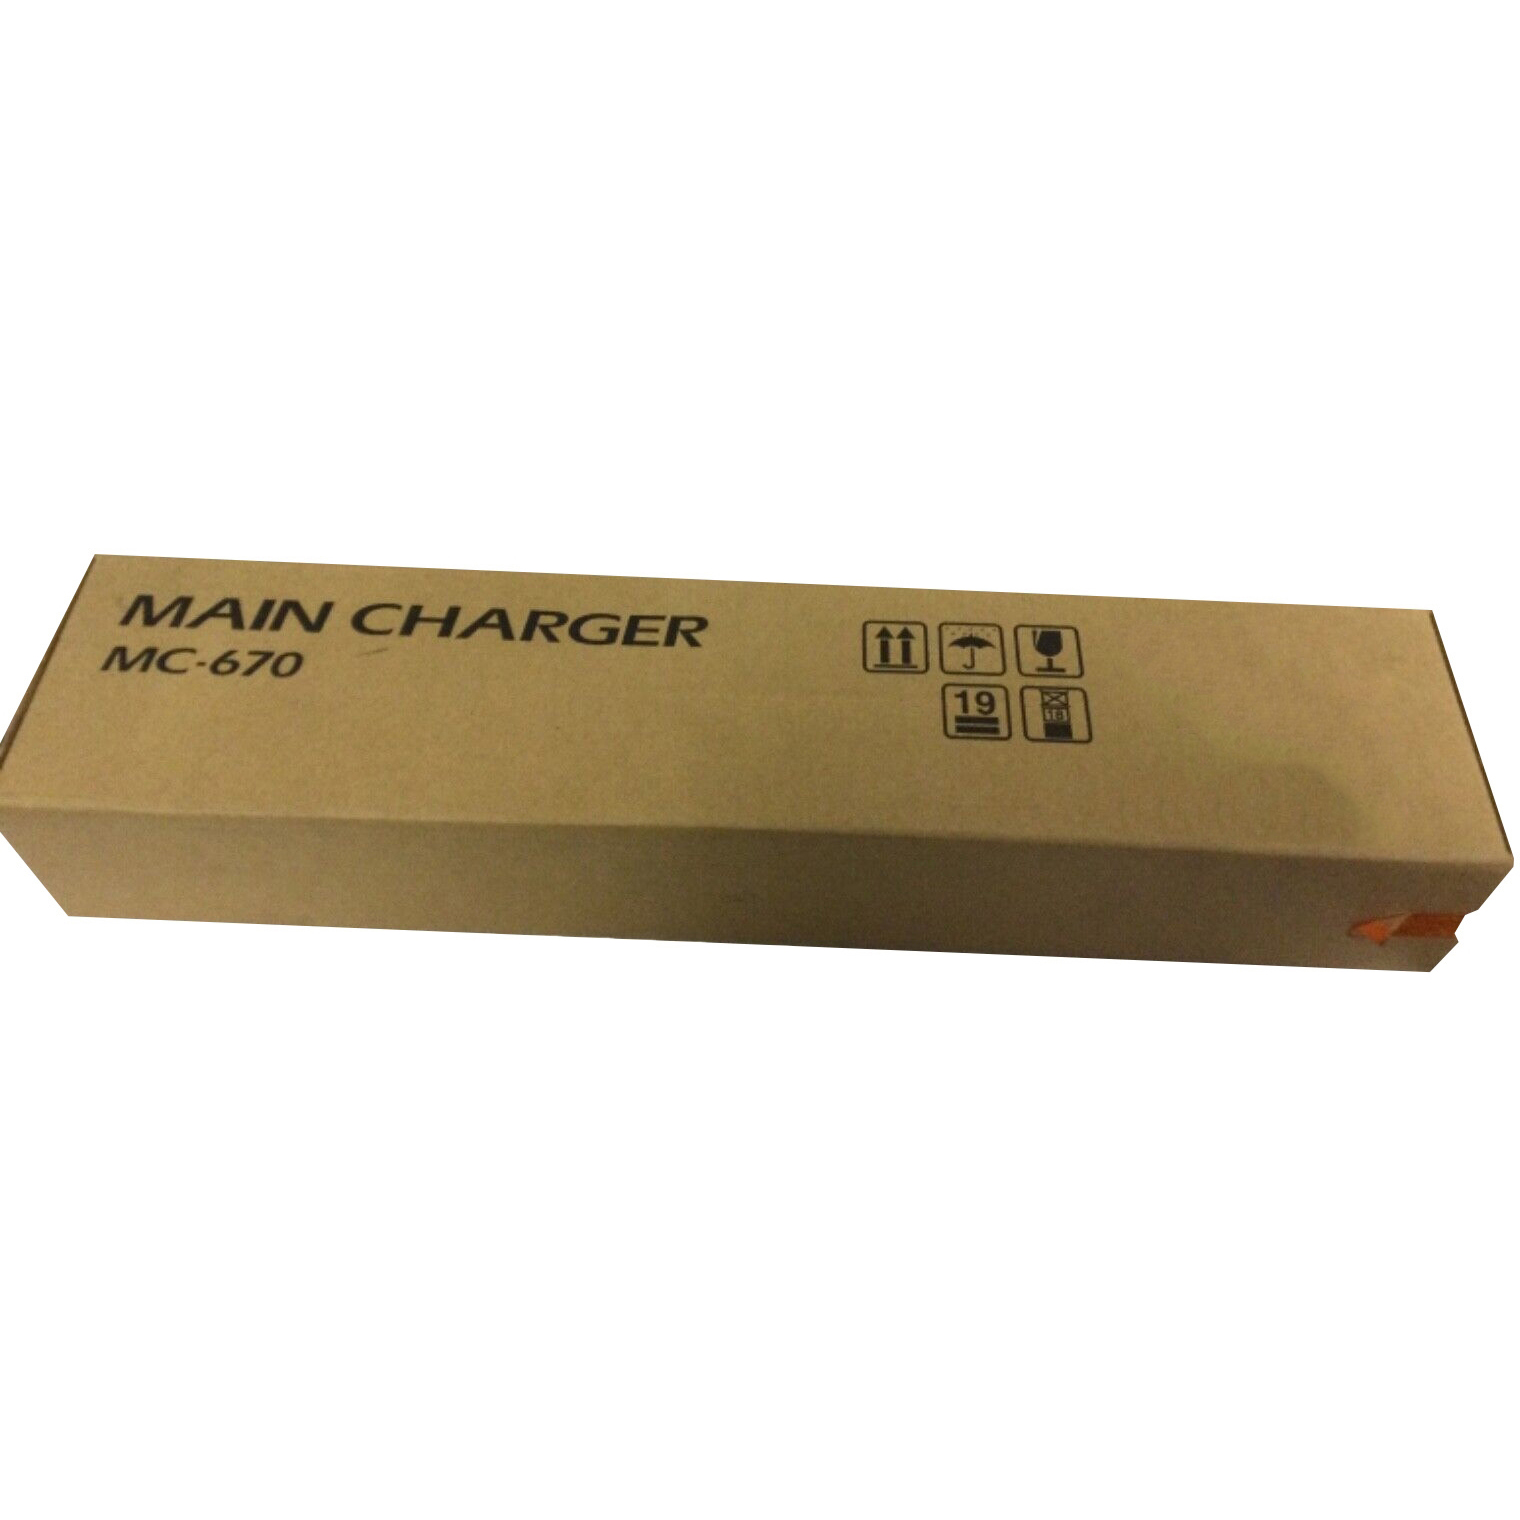 Original Kyocera MC-670 Main Charge Corona (302H093312)